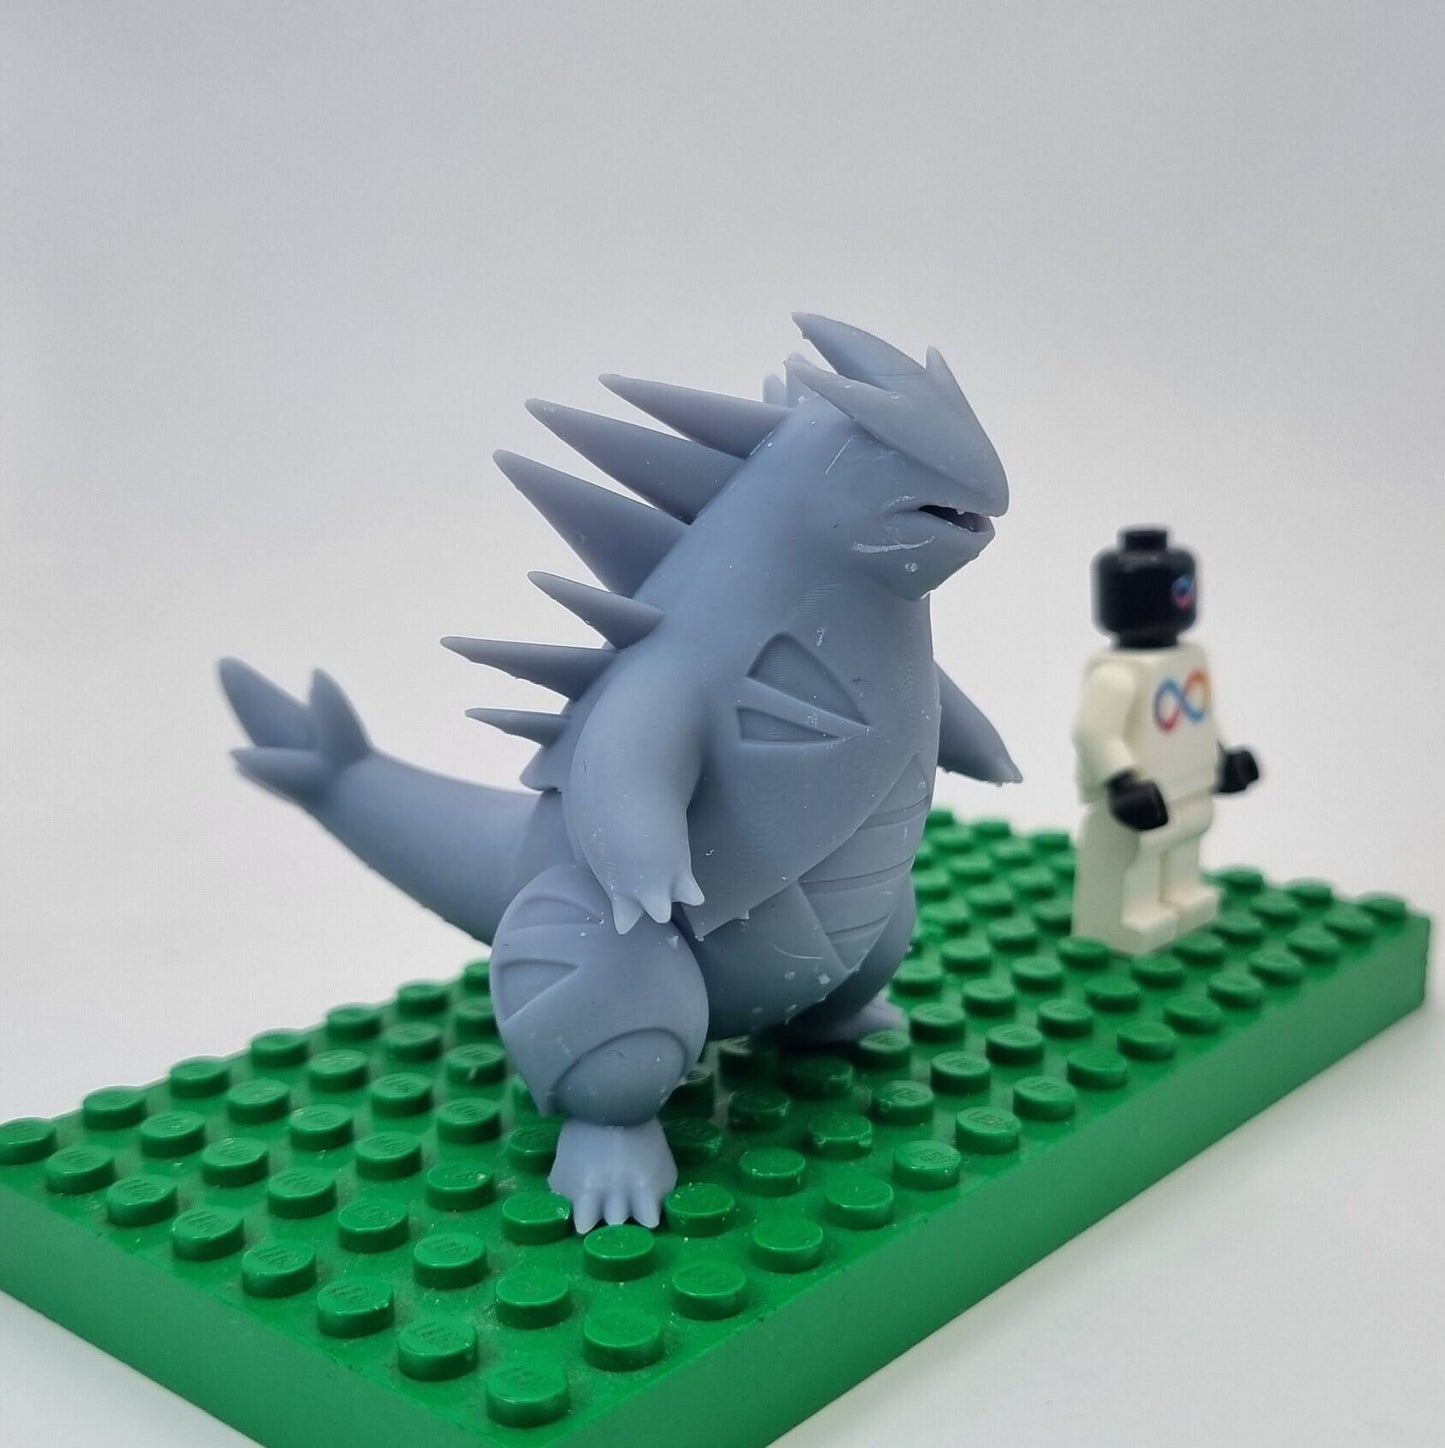 Building toy custom 3D printed animal to catch spikey dinosaur!